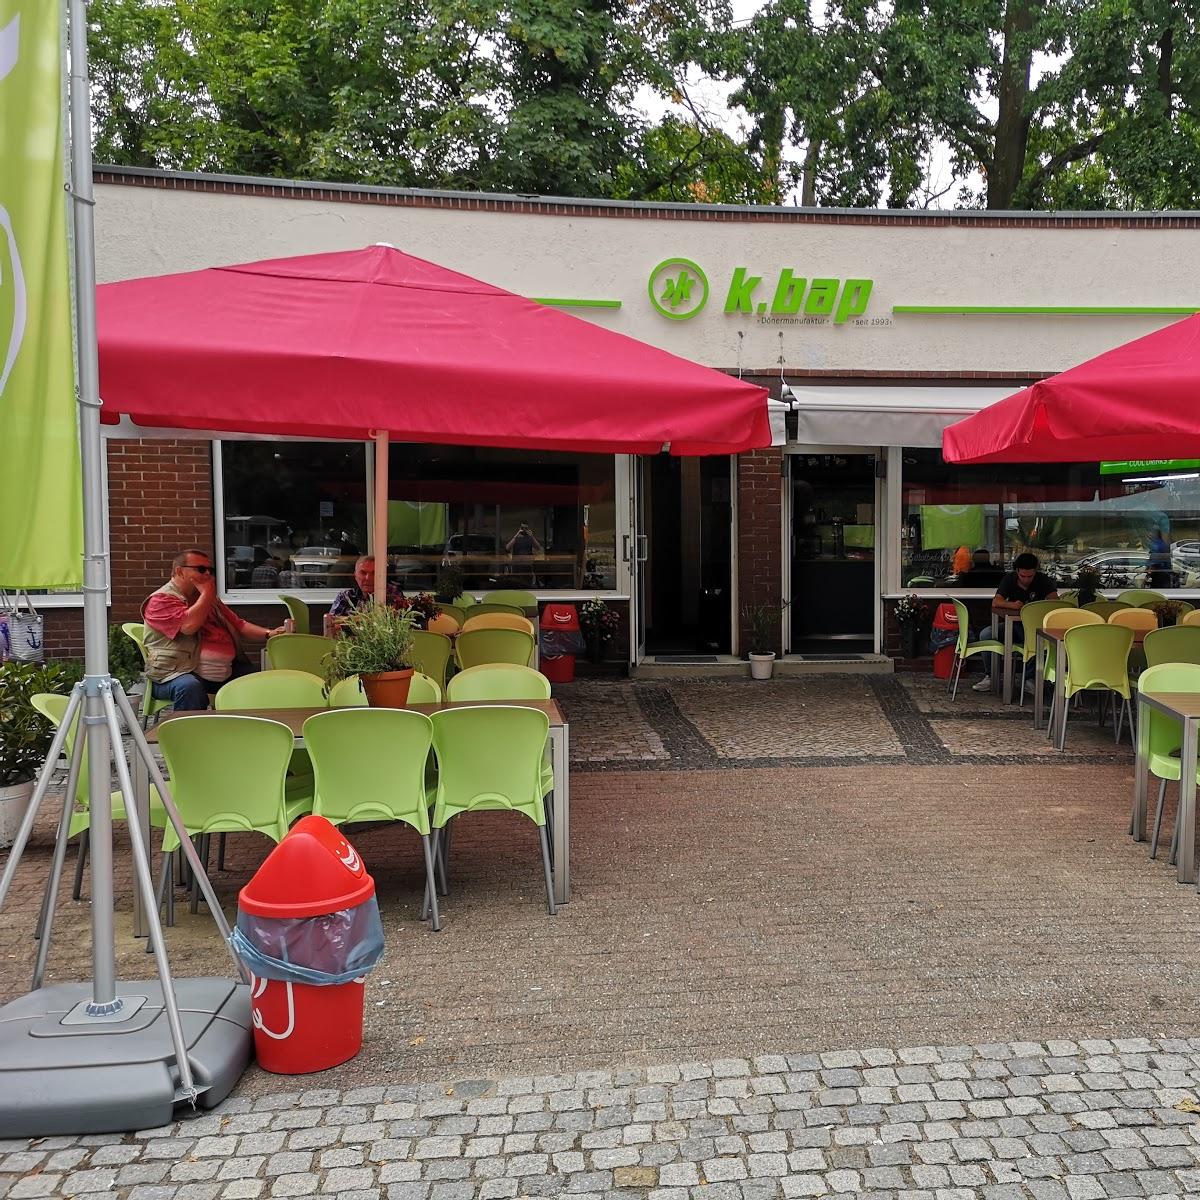 Restaurant "k.bap" in Berlin